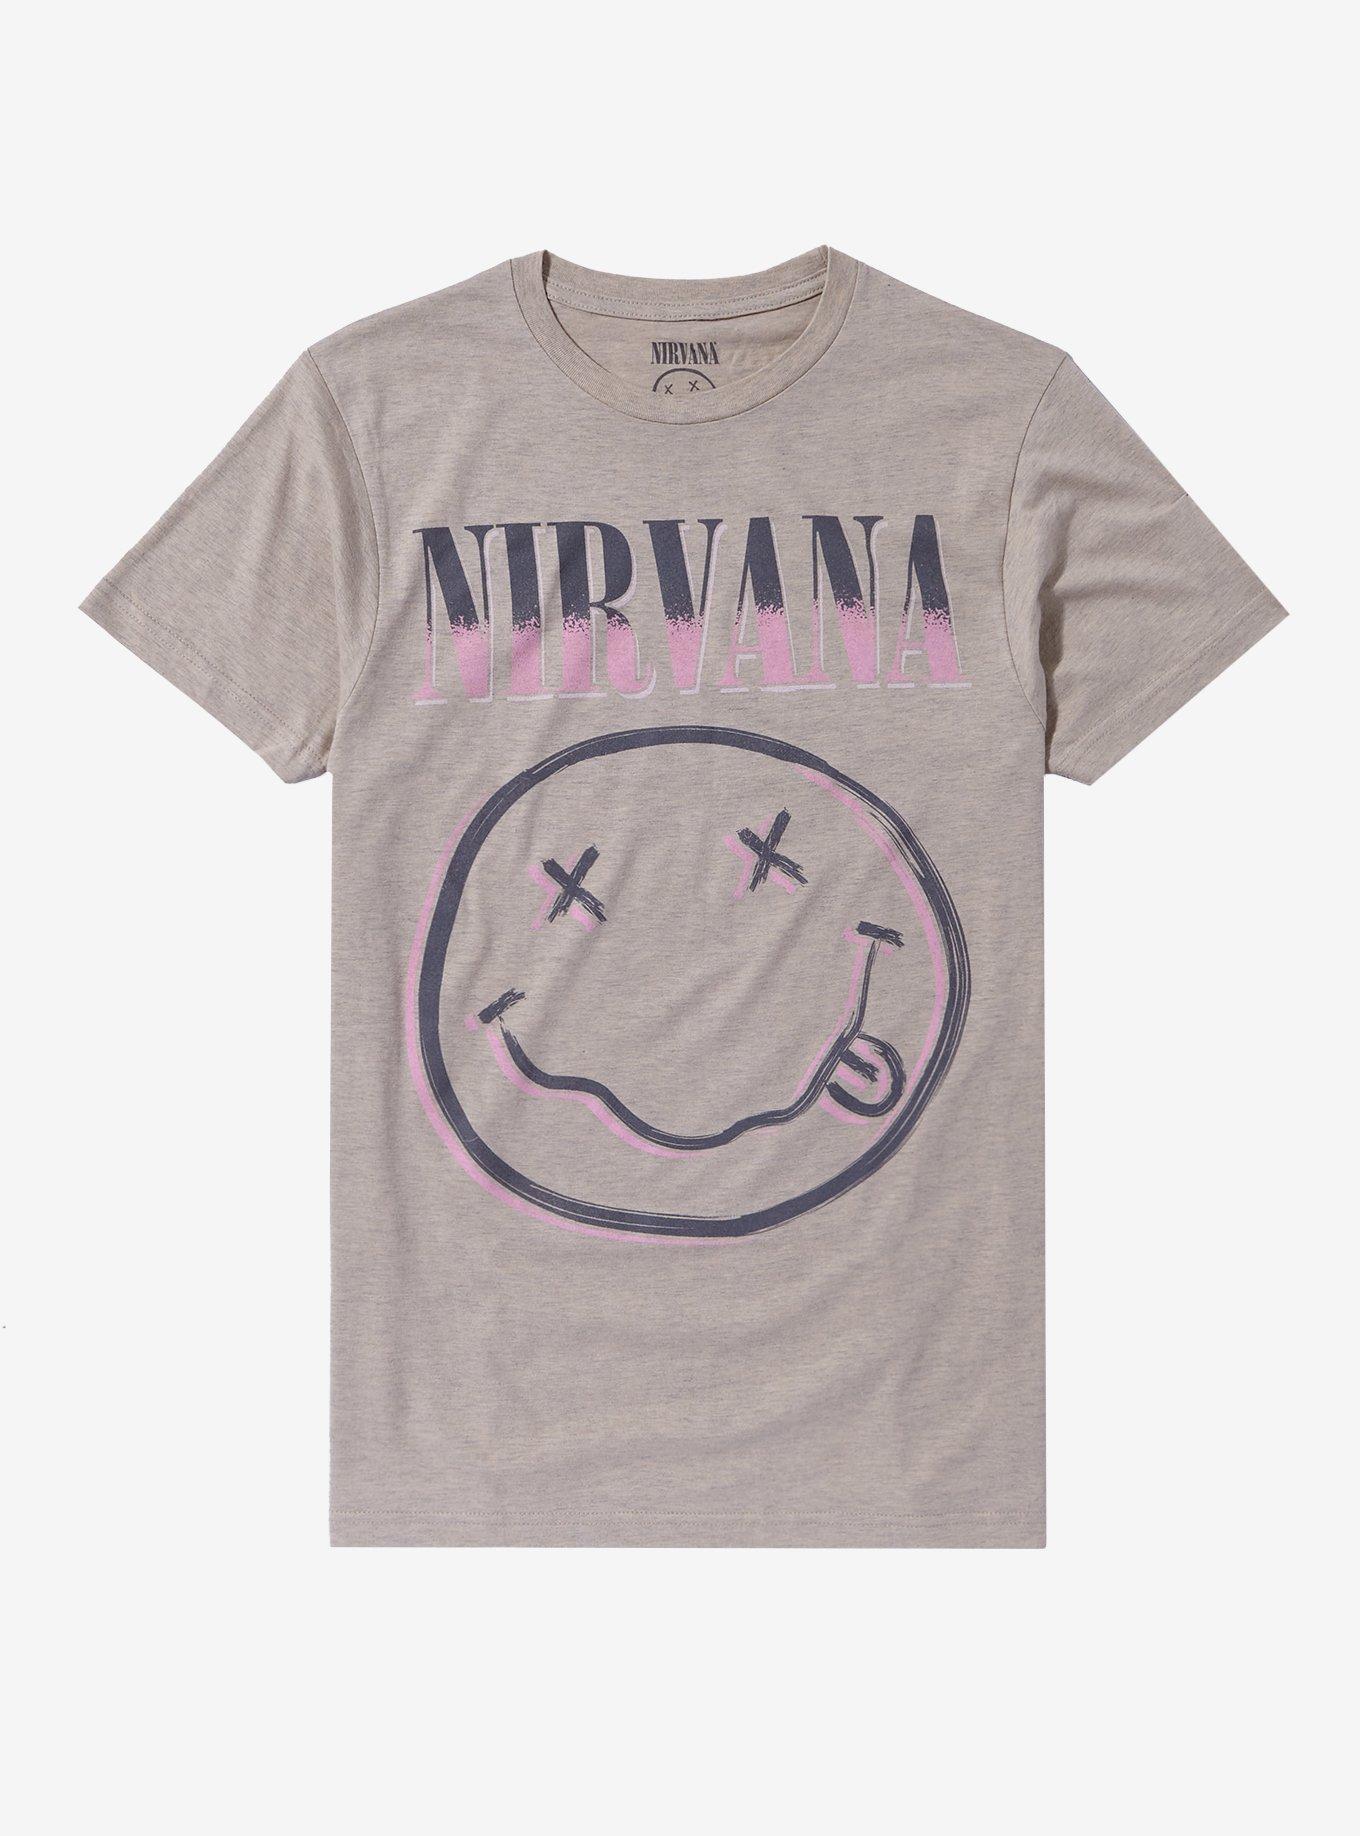 Nirvana Logo Heather Oatmeal Boyfriend Fit Girls T-Shirt